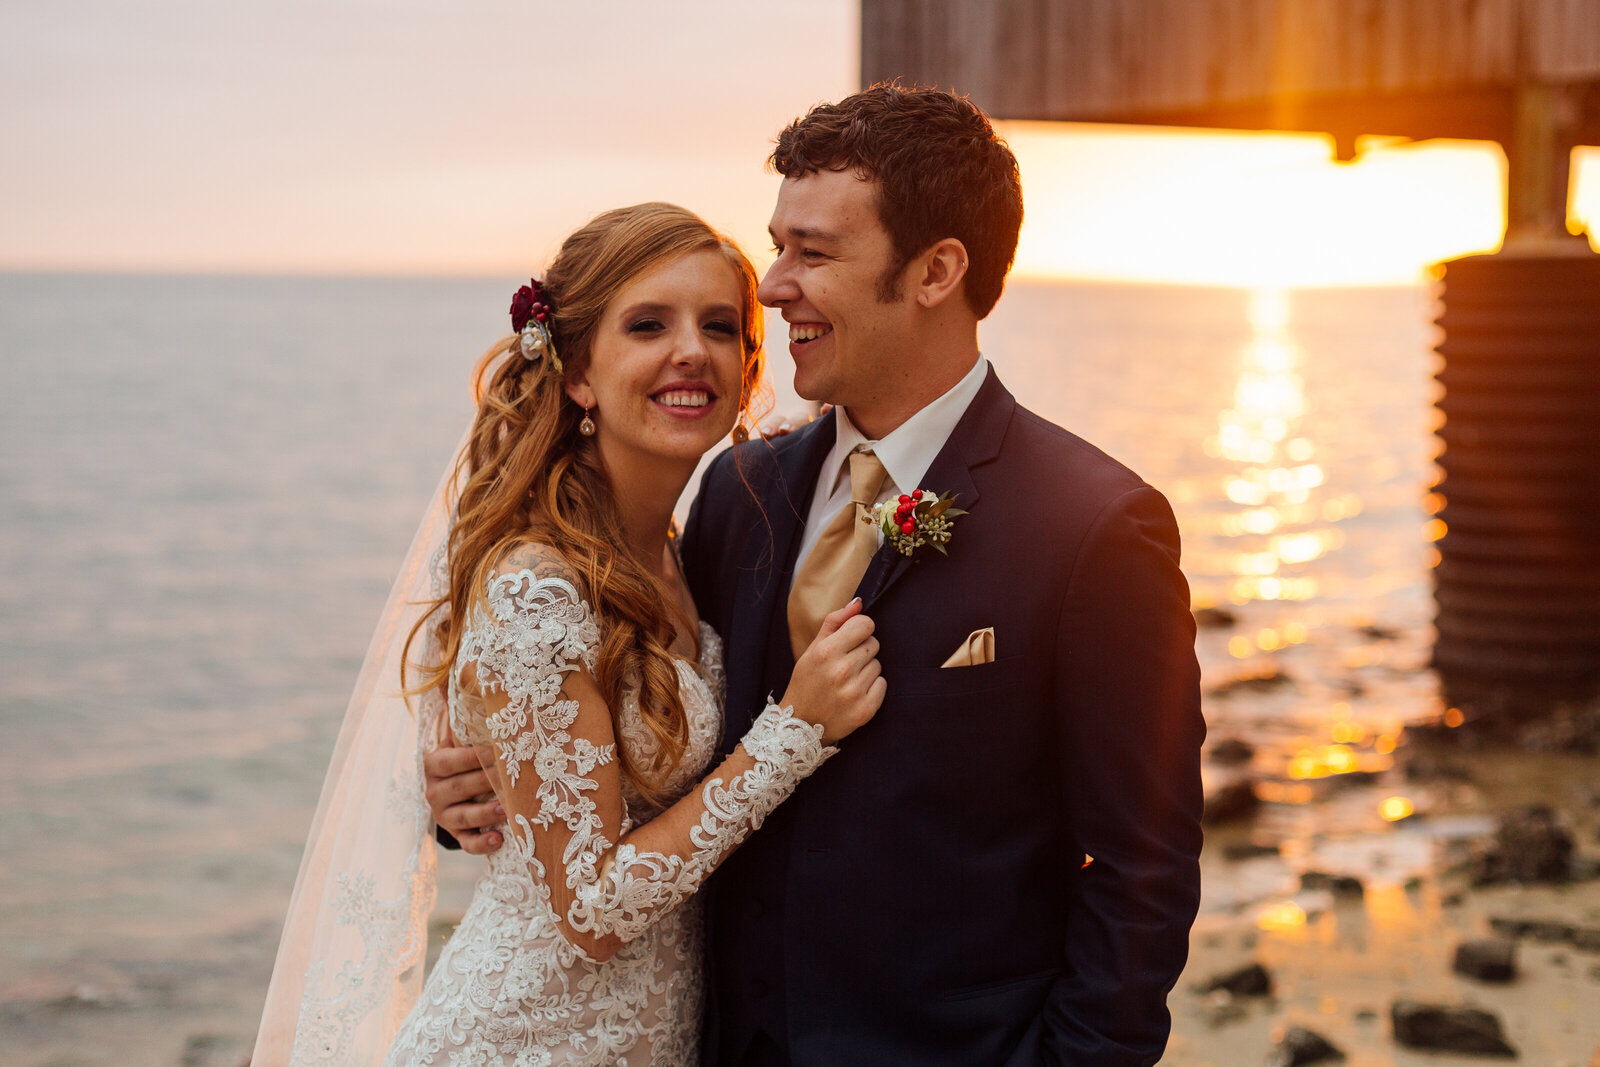 bride-and-groom-at-beach-basking-in-sunset-photo-iris-and-urchin-ryey